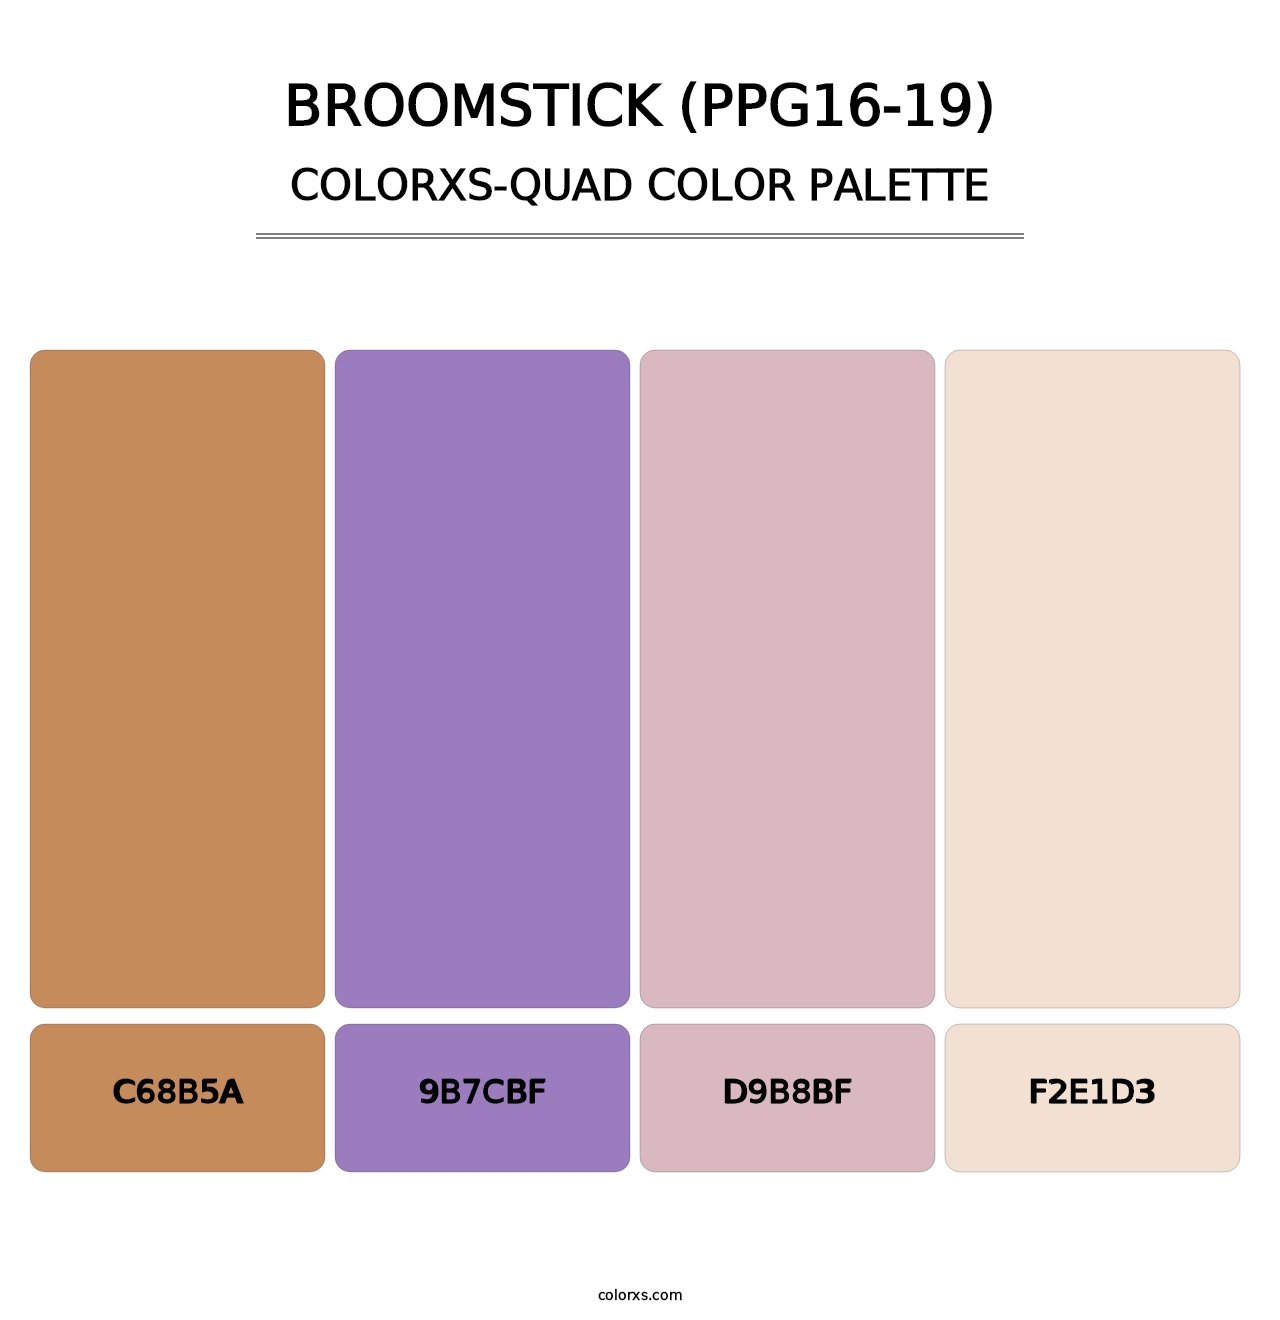 Broomstick (PPG16-19) - Colorxs Quad Palette